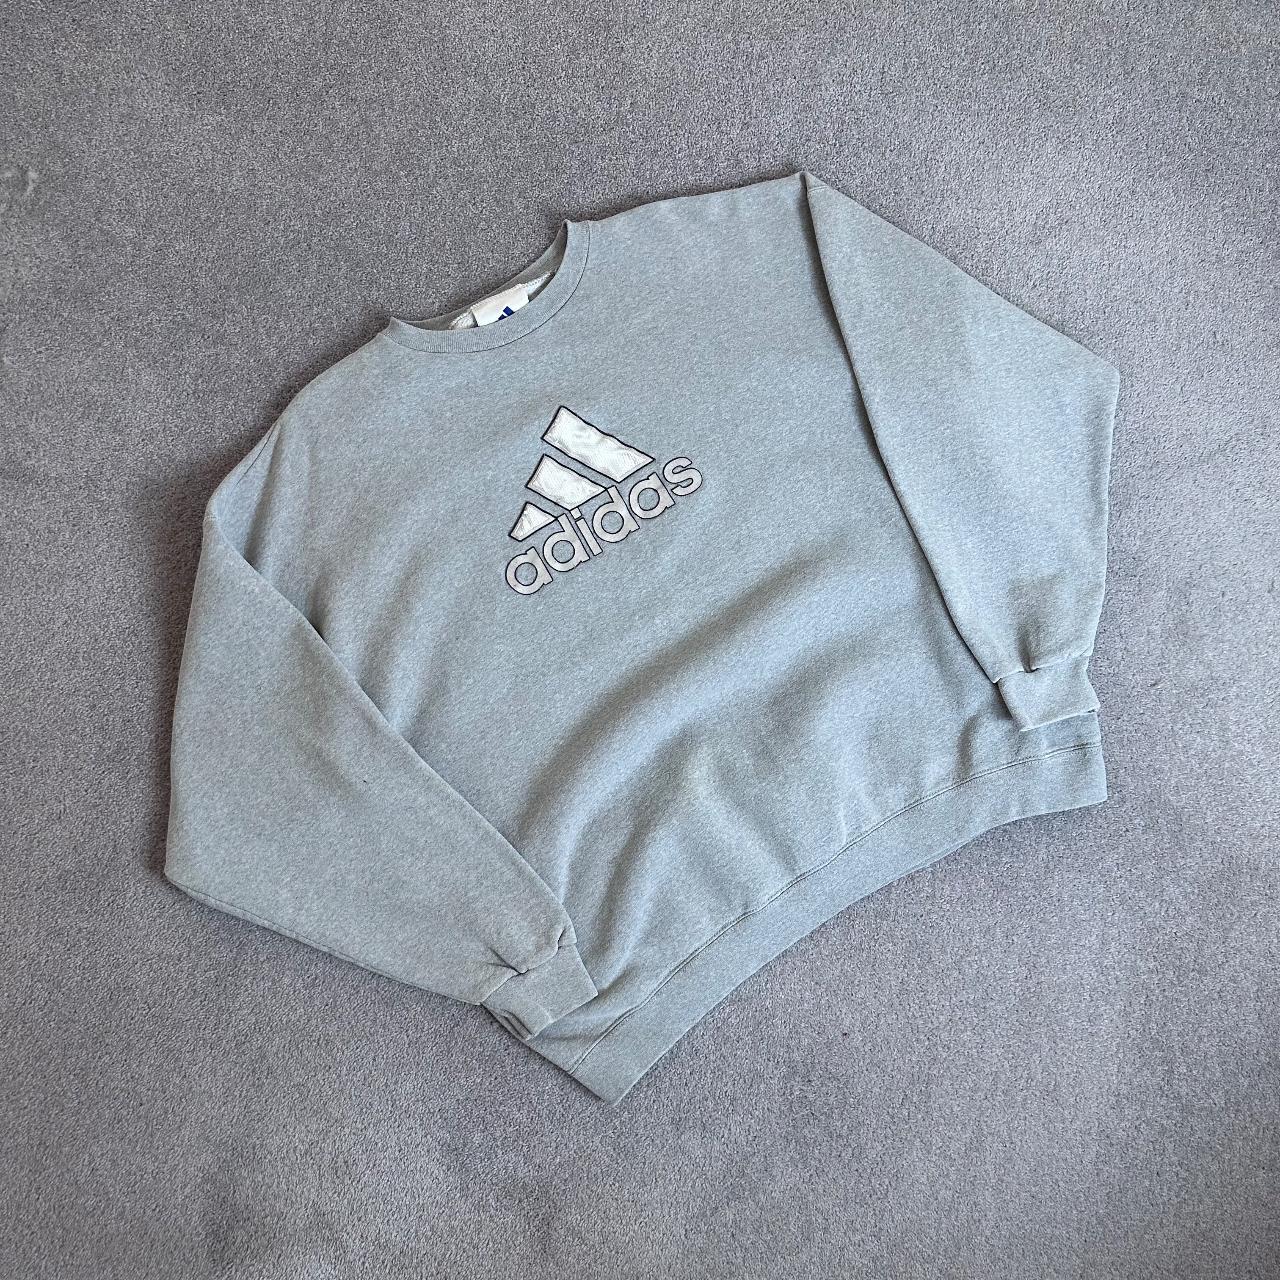 Vintage 90s Adidas baggy spellout sweatshirt -... - Depop